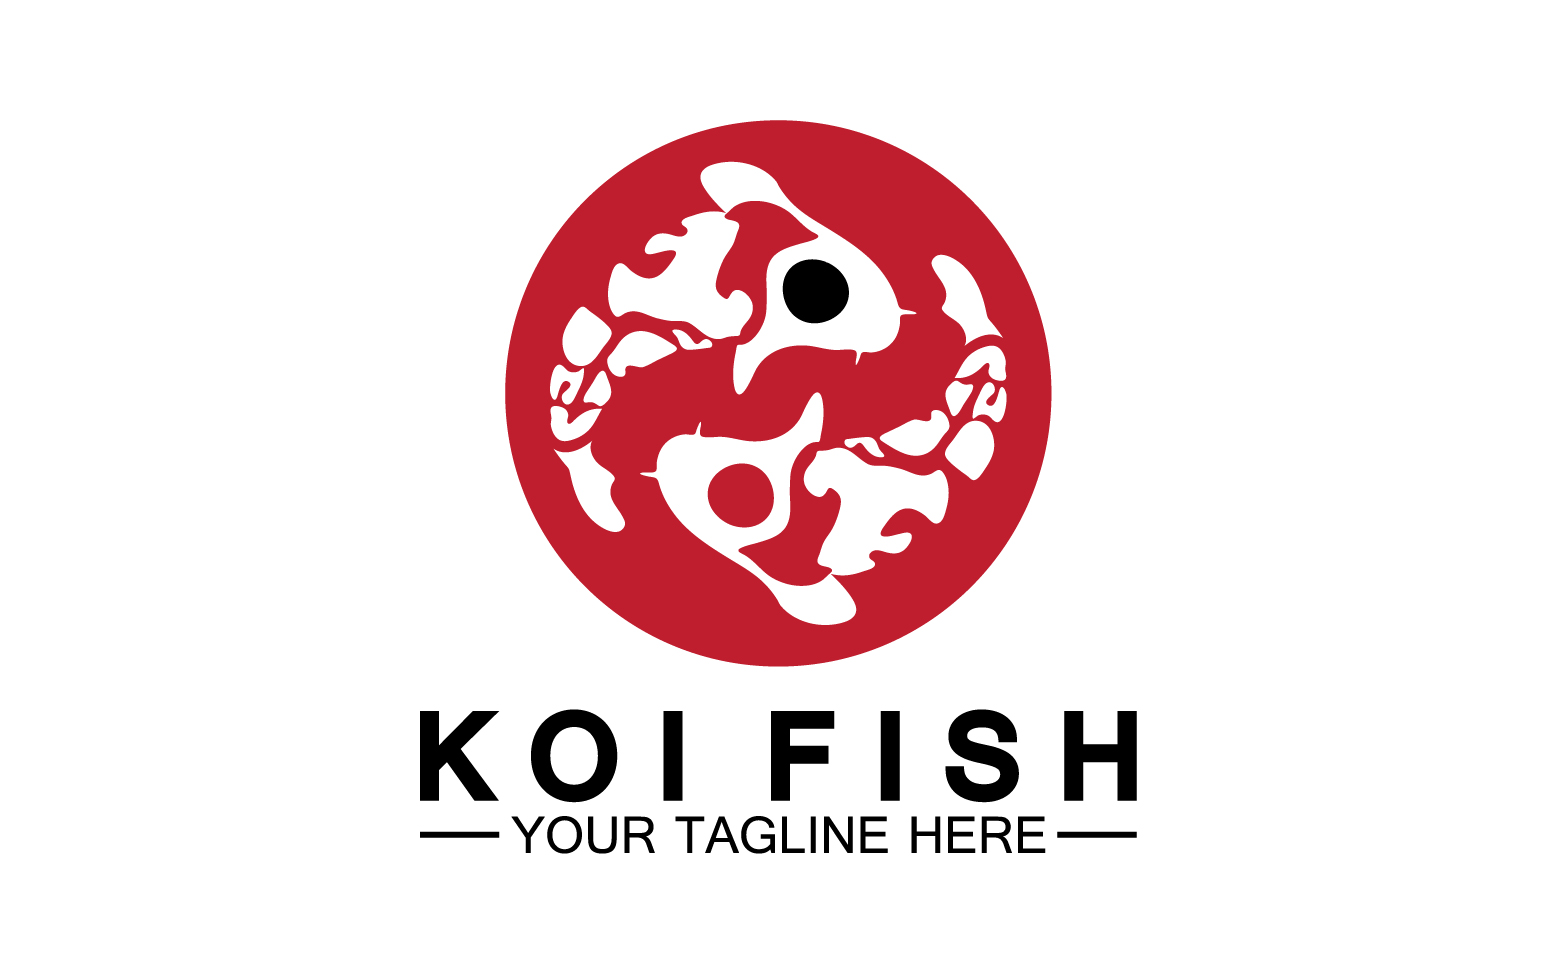 Fish koi black and red icon logo vector v50